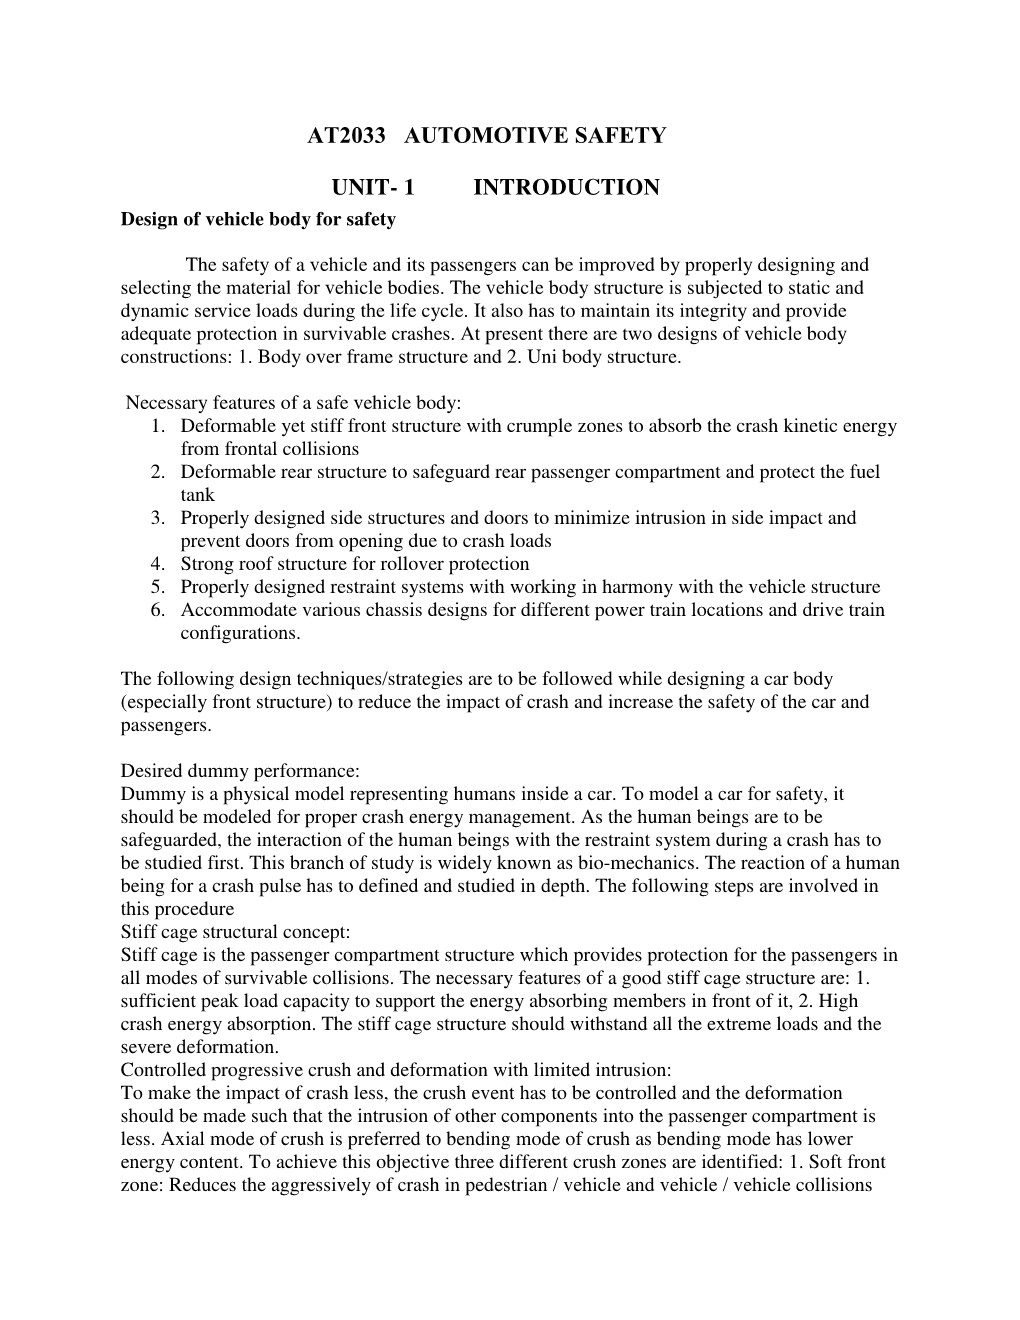 At2033 Automotive Safety Unit- 1 Introduction